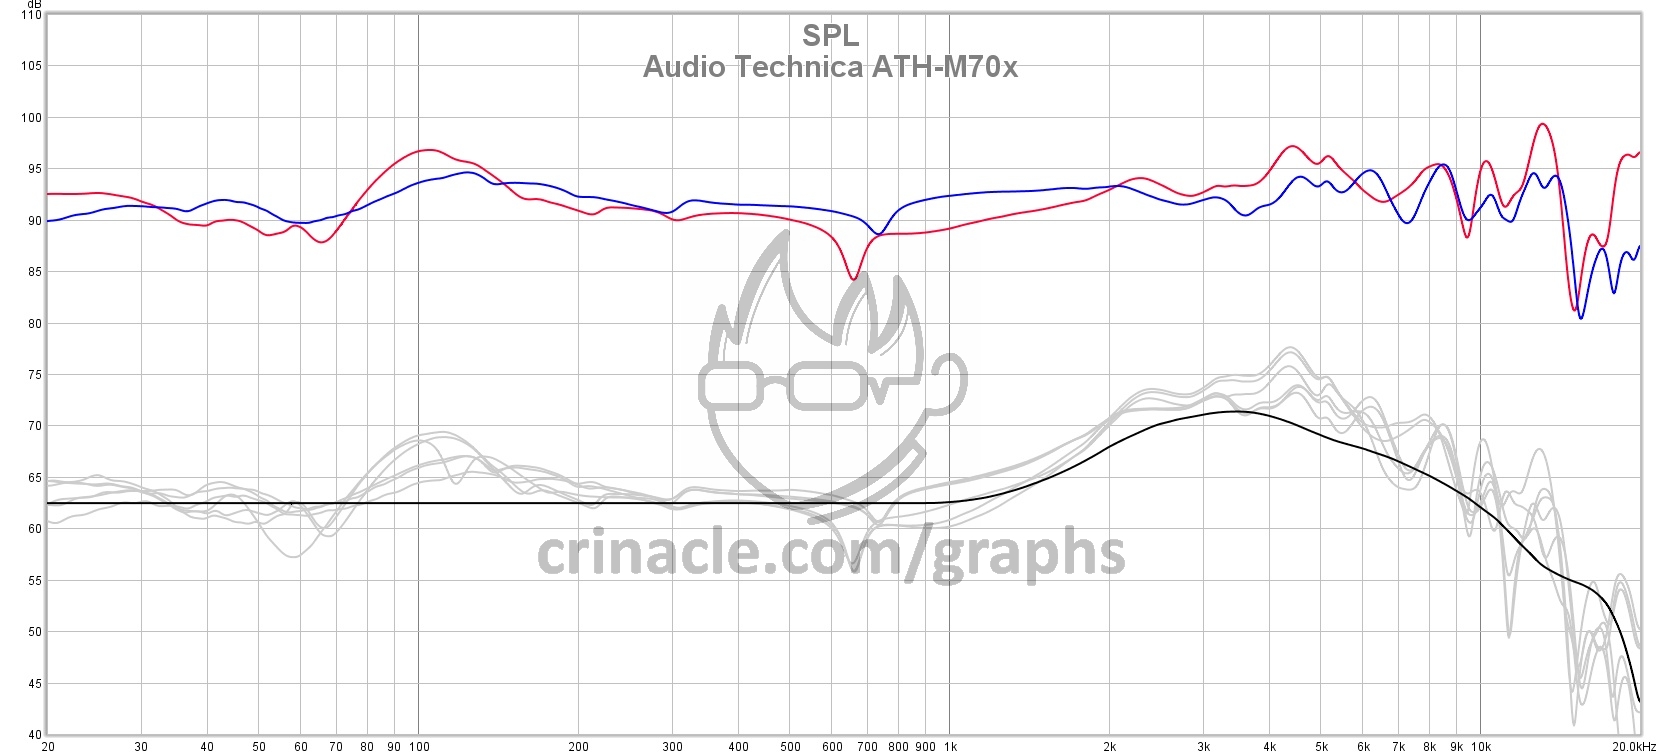 Audio Technica ATH-M70x – In-Ear Fidelity